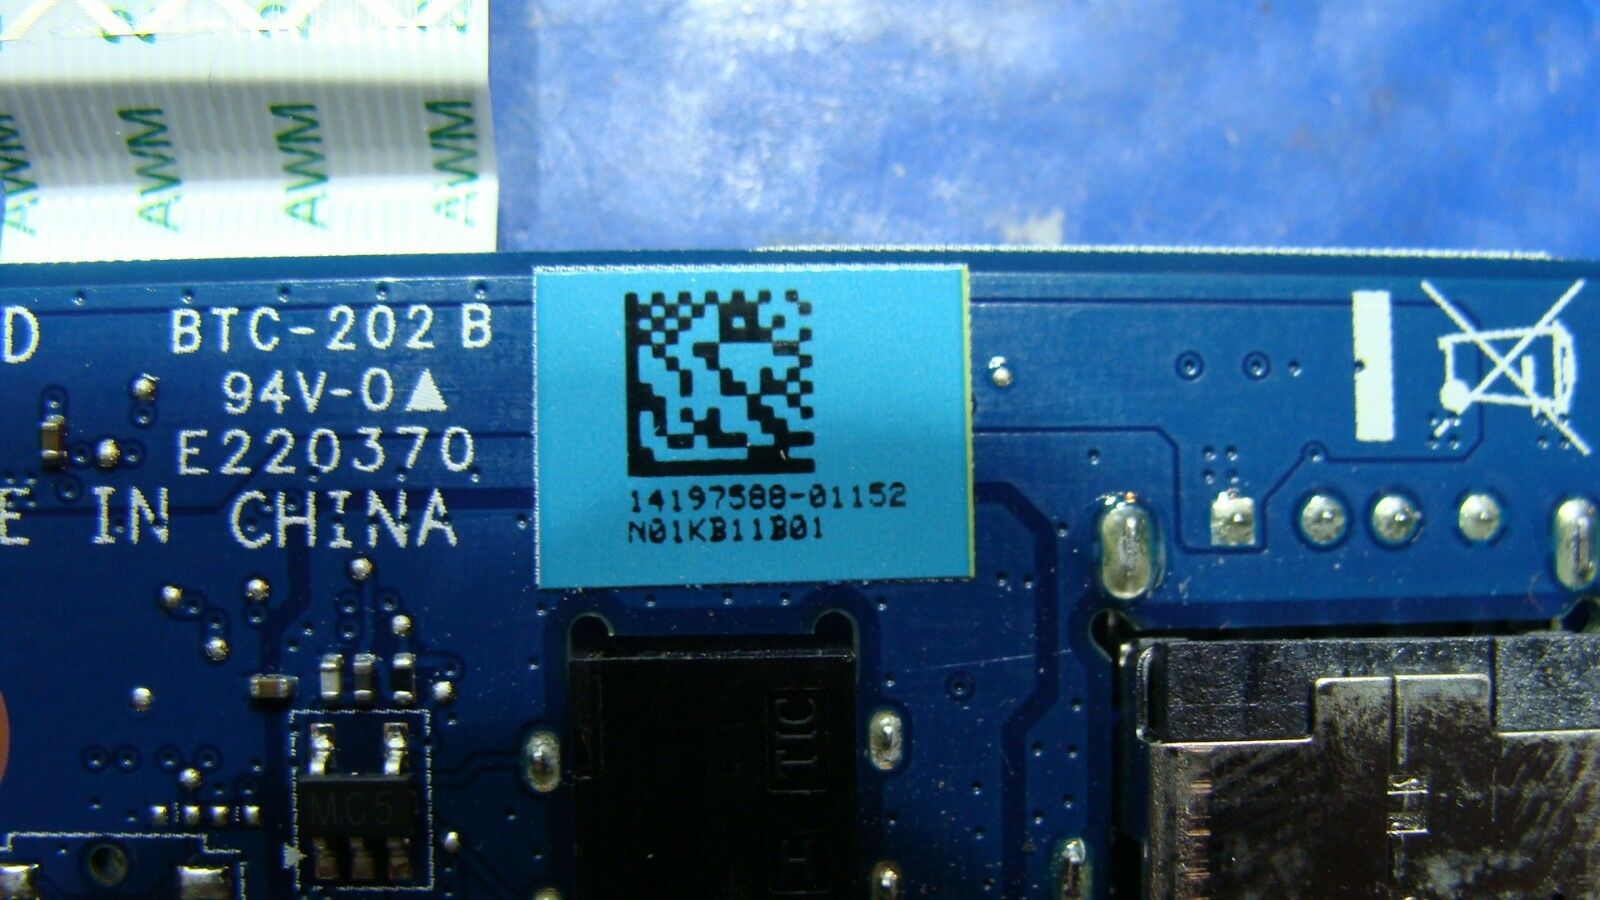 Toshiba Satellite CL15t-B1204X 11.6